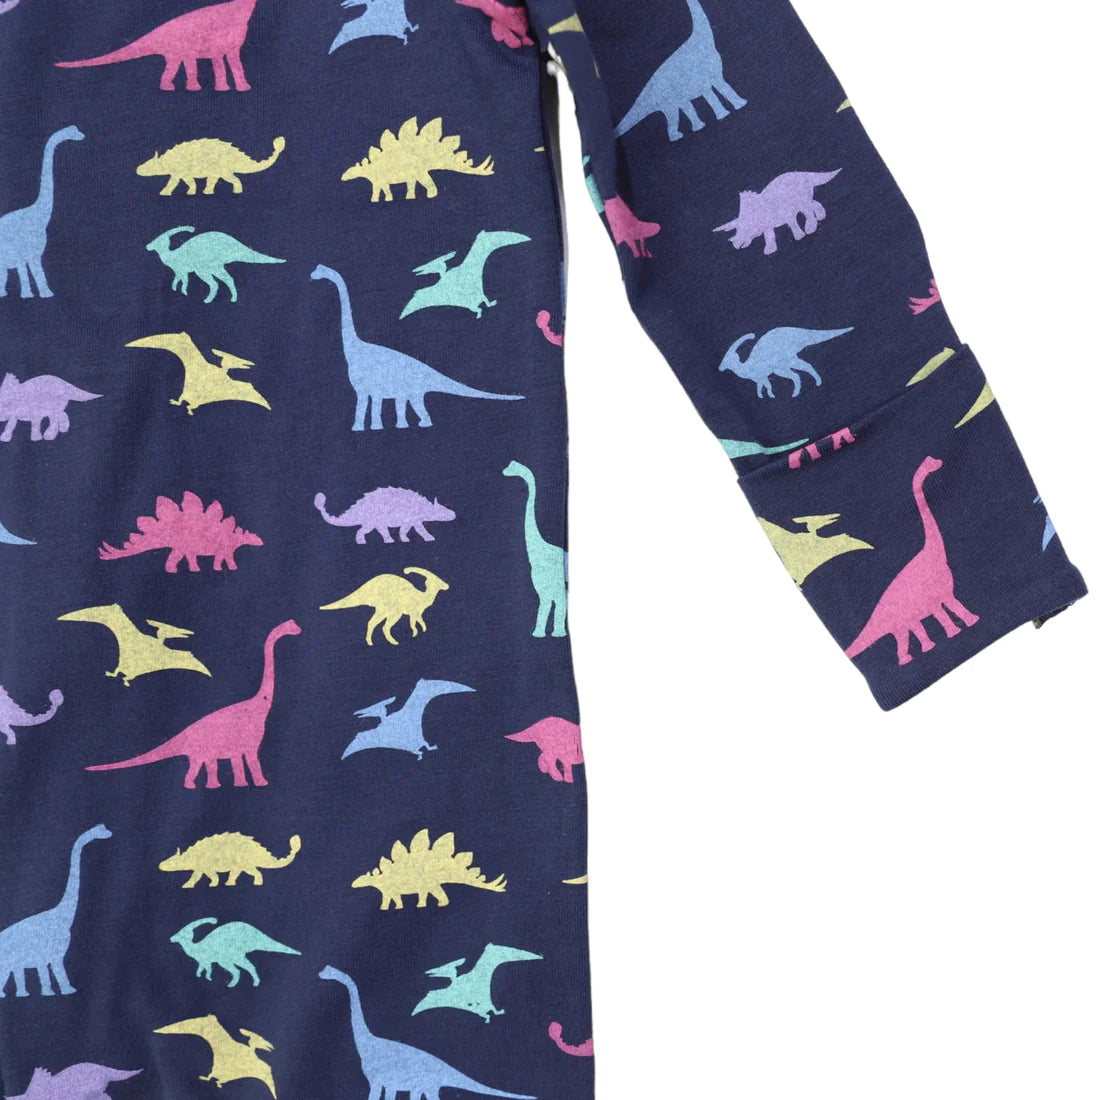 Romper - Dinoasaur Print Long Sleeve - Navy / Multi-coloured